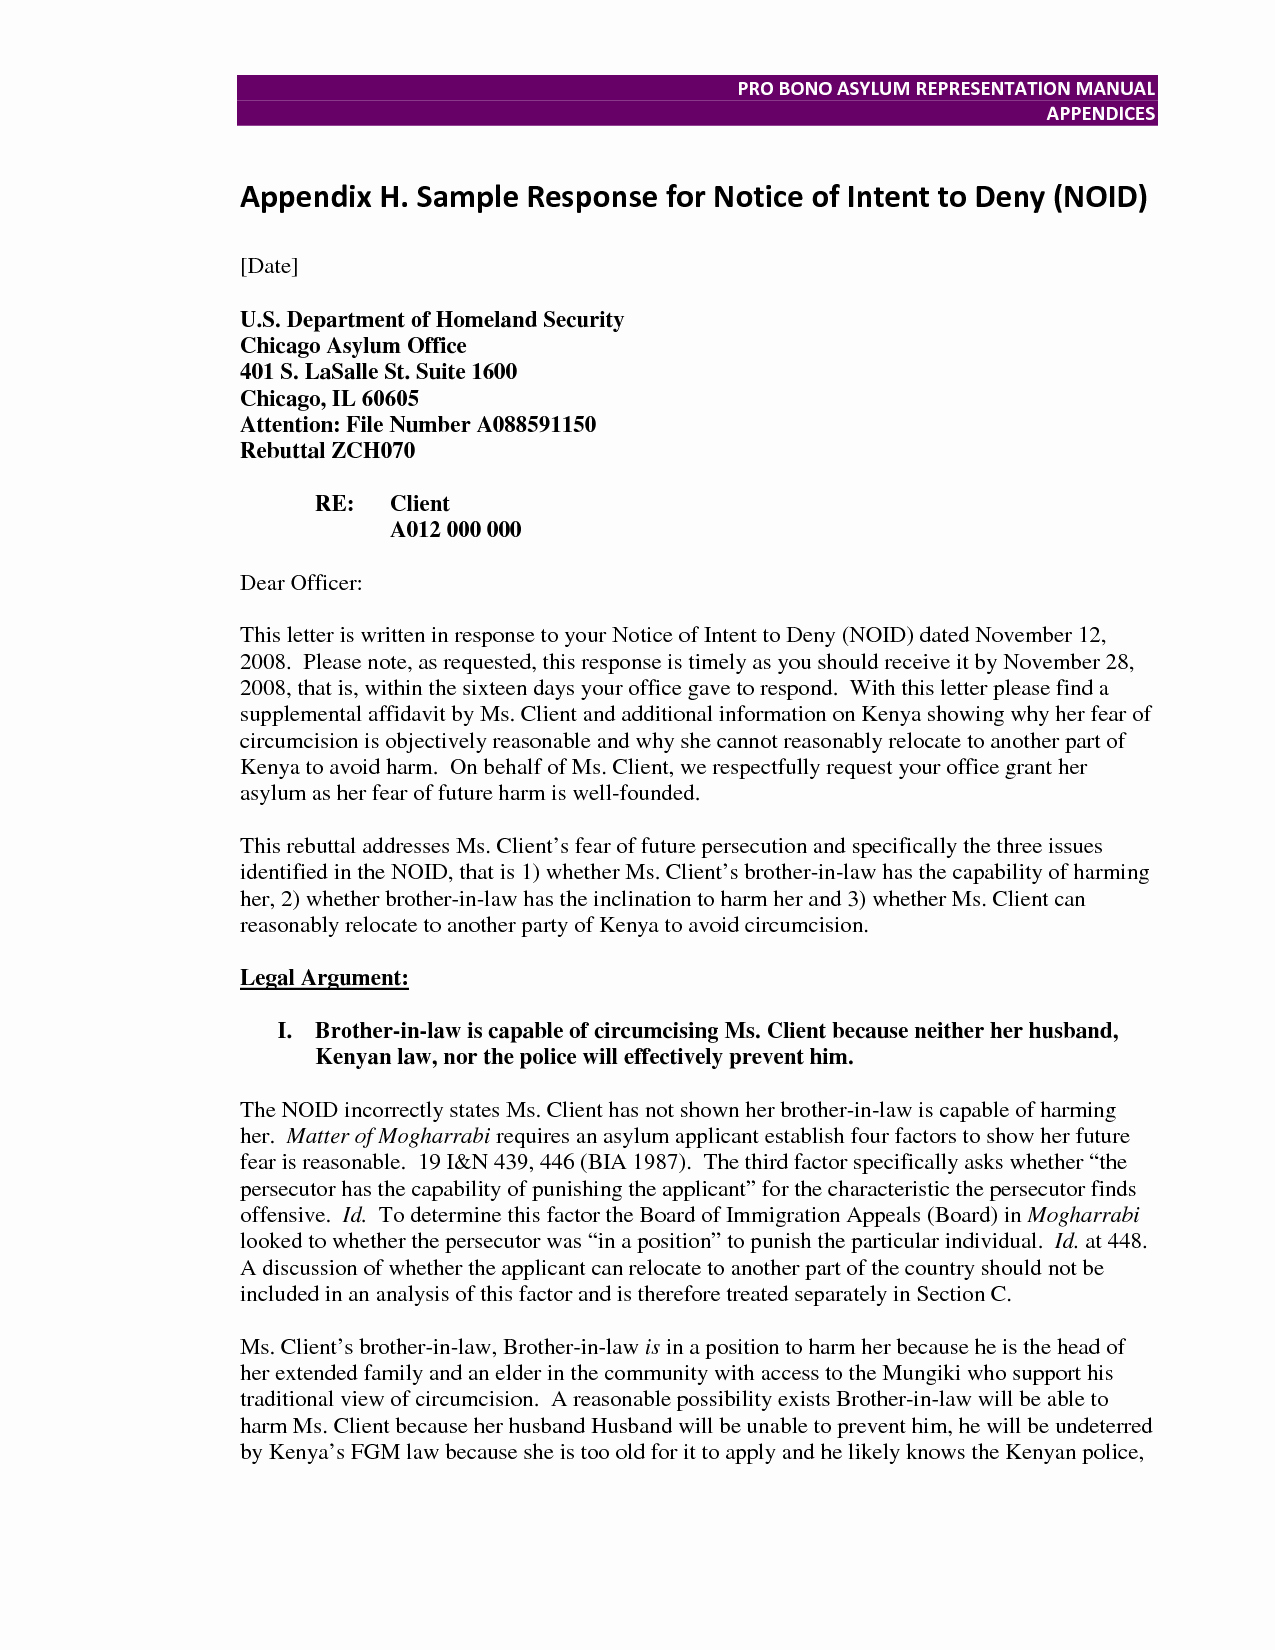 Affidavit Of Support Letter Sample Unique How to Write A Sworn Affidavit for Immigration